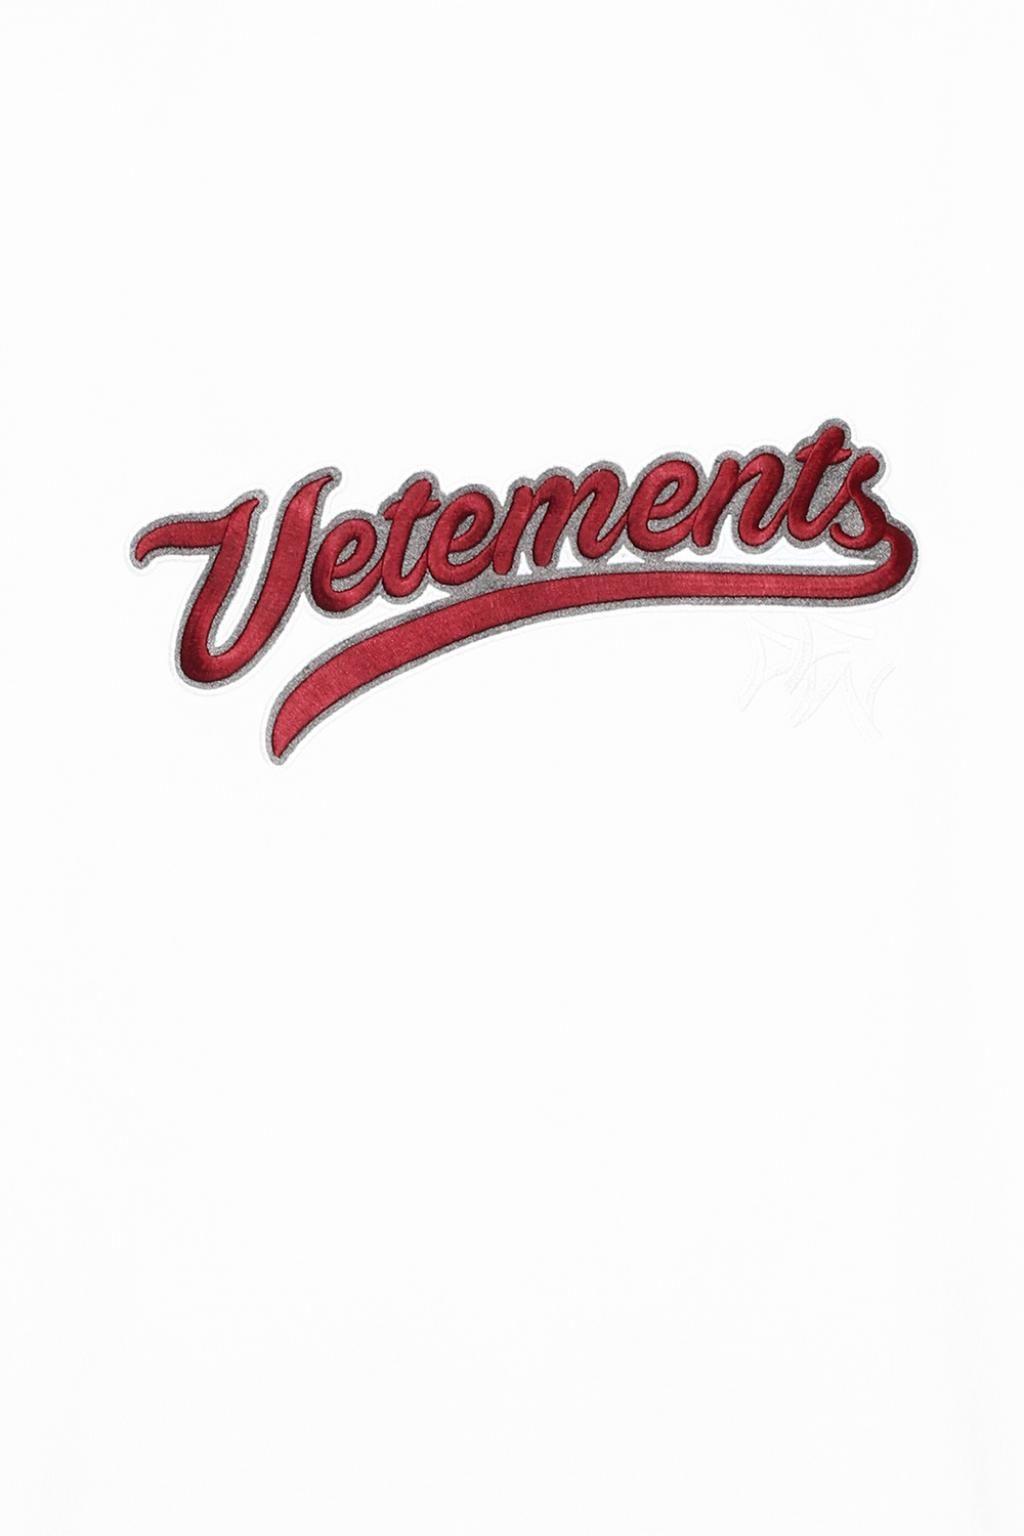 Vetements Logo - Vetements White Logo T-shirt for men